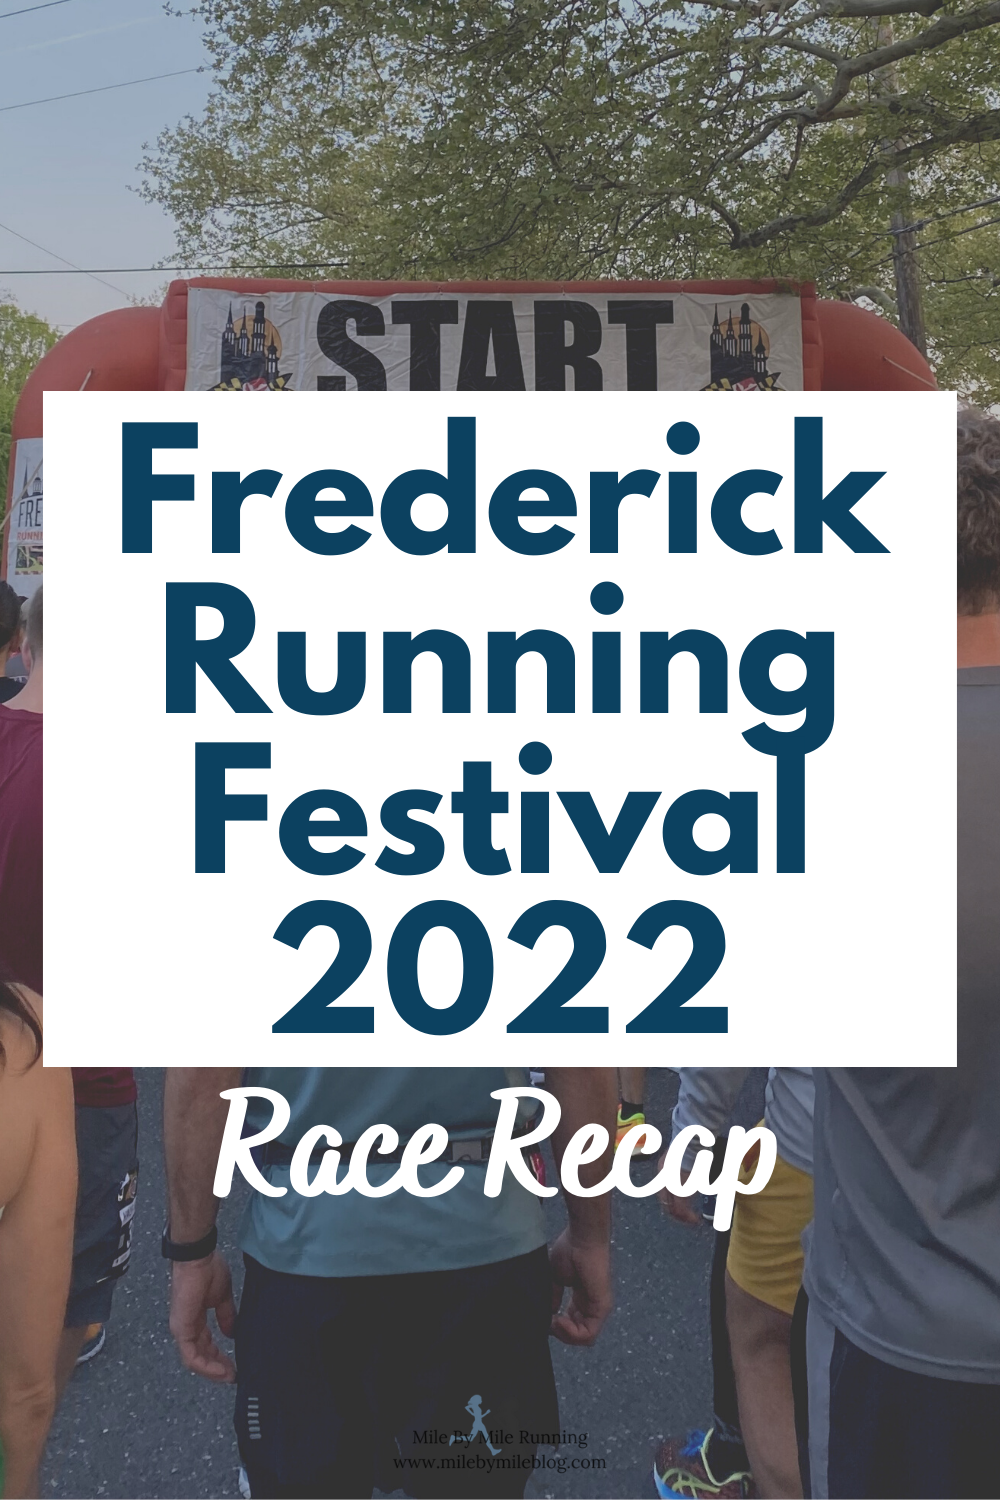 On May 1st I ran the Frederick Running Festival half-marathon, which was my first live half-marathon since 2017 and also my first live postpartum half.